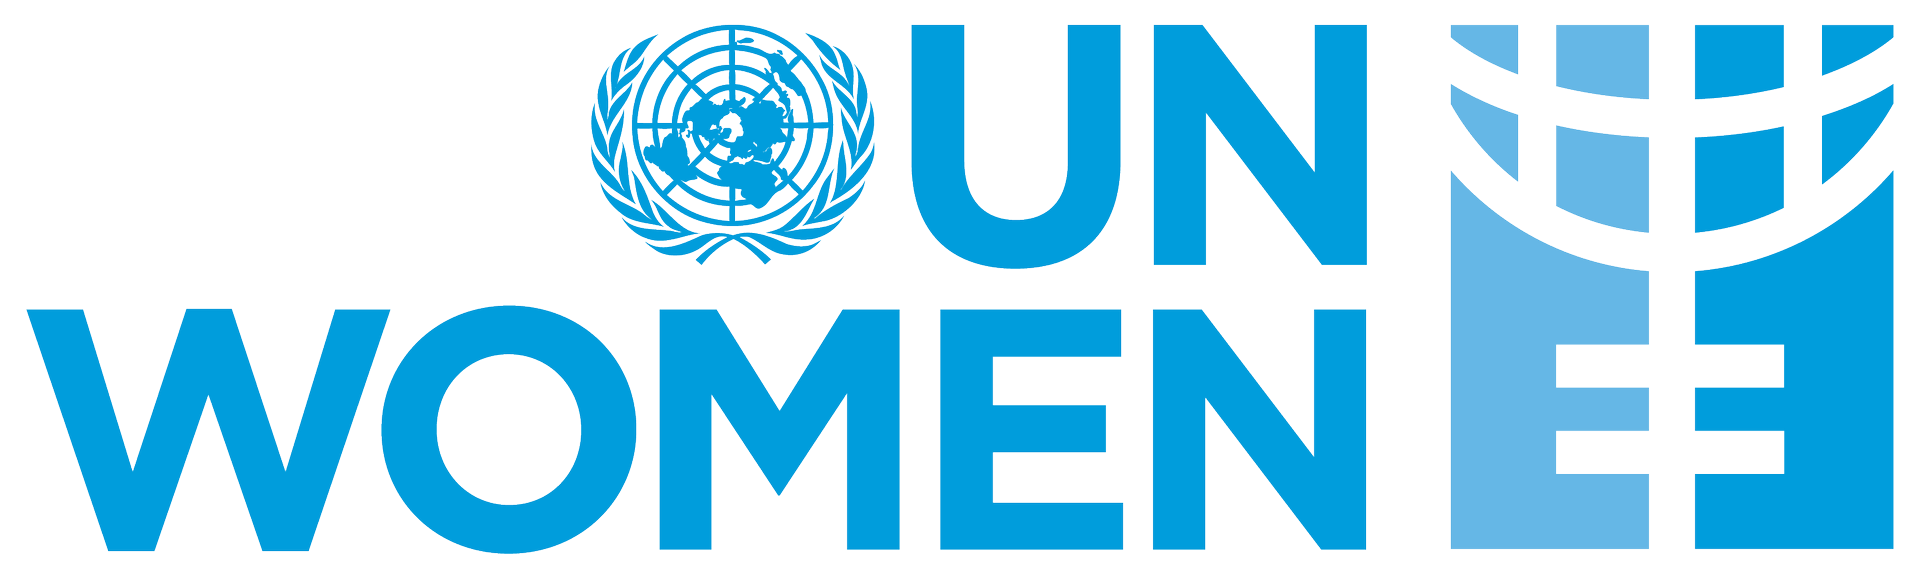 UN Women logo2